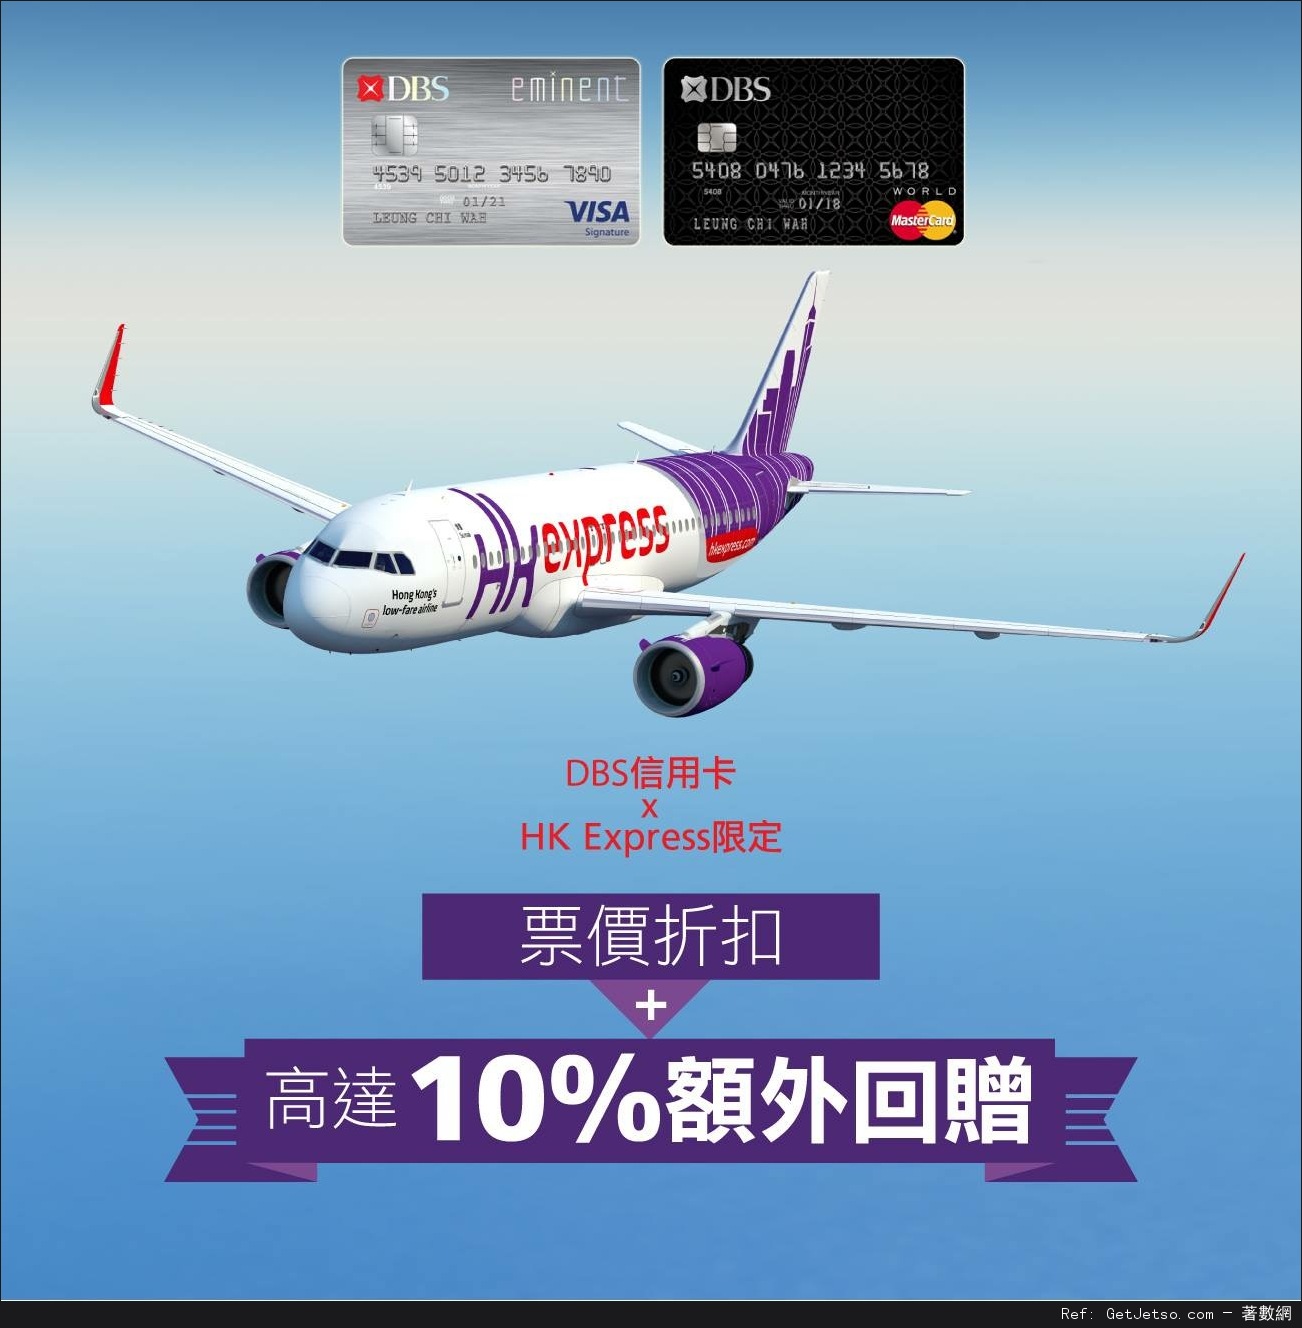 DBS信用卡享HK Express8折及額外10%回贈機票優惠(至15年11月23日)圖片1